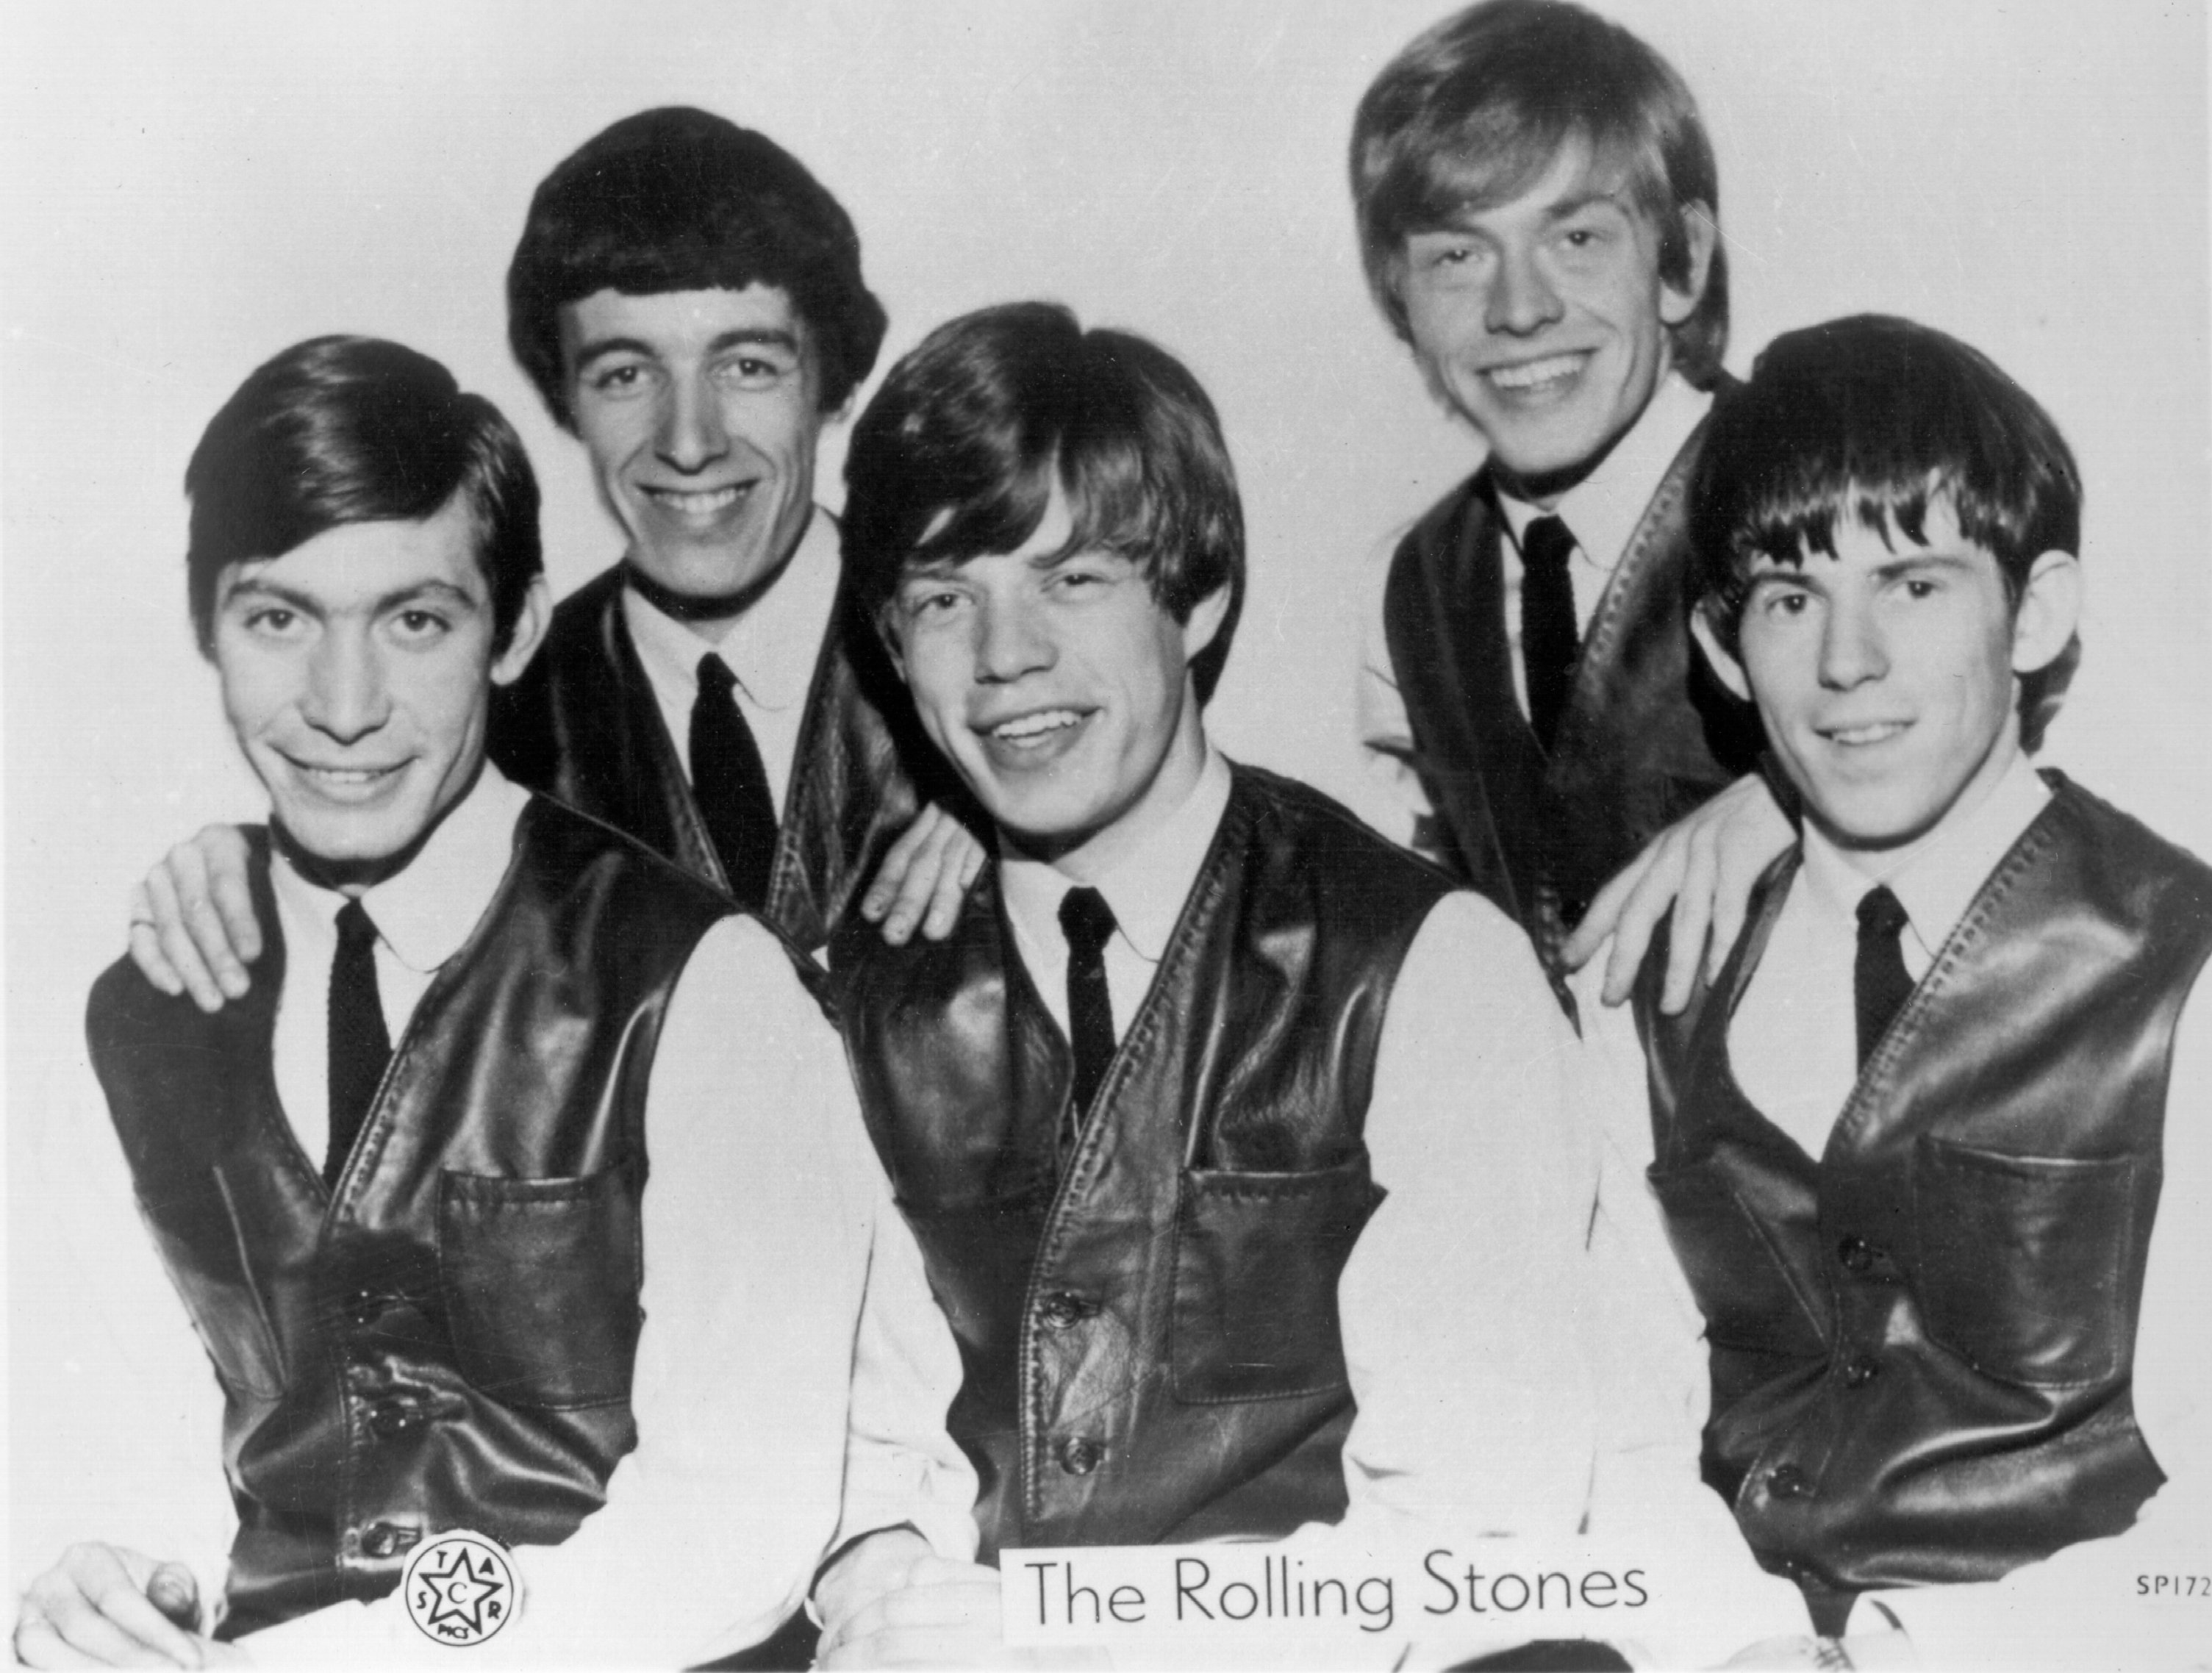 The Rolling Stones' Charlie Watts, Bill Wyman, Mick Jagger, Brian Jones, and Keith Richards